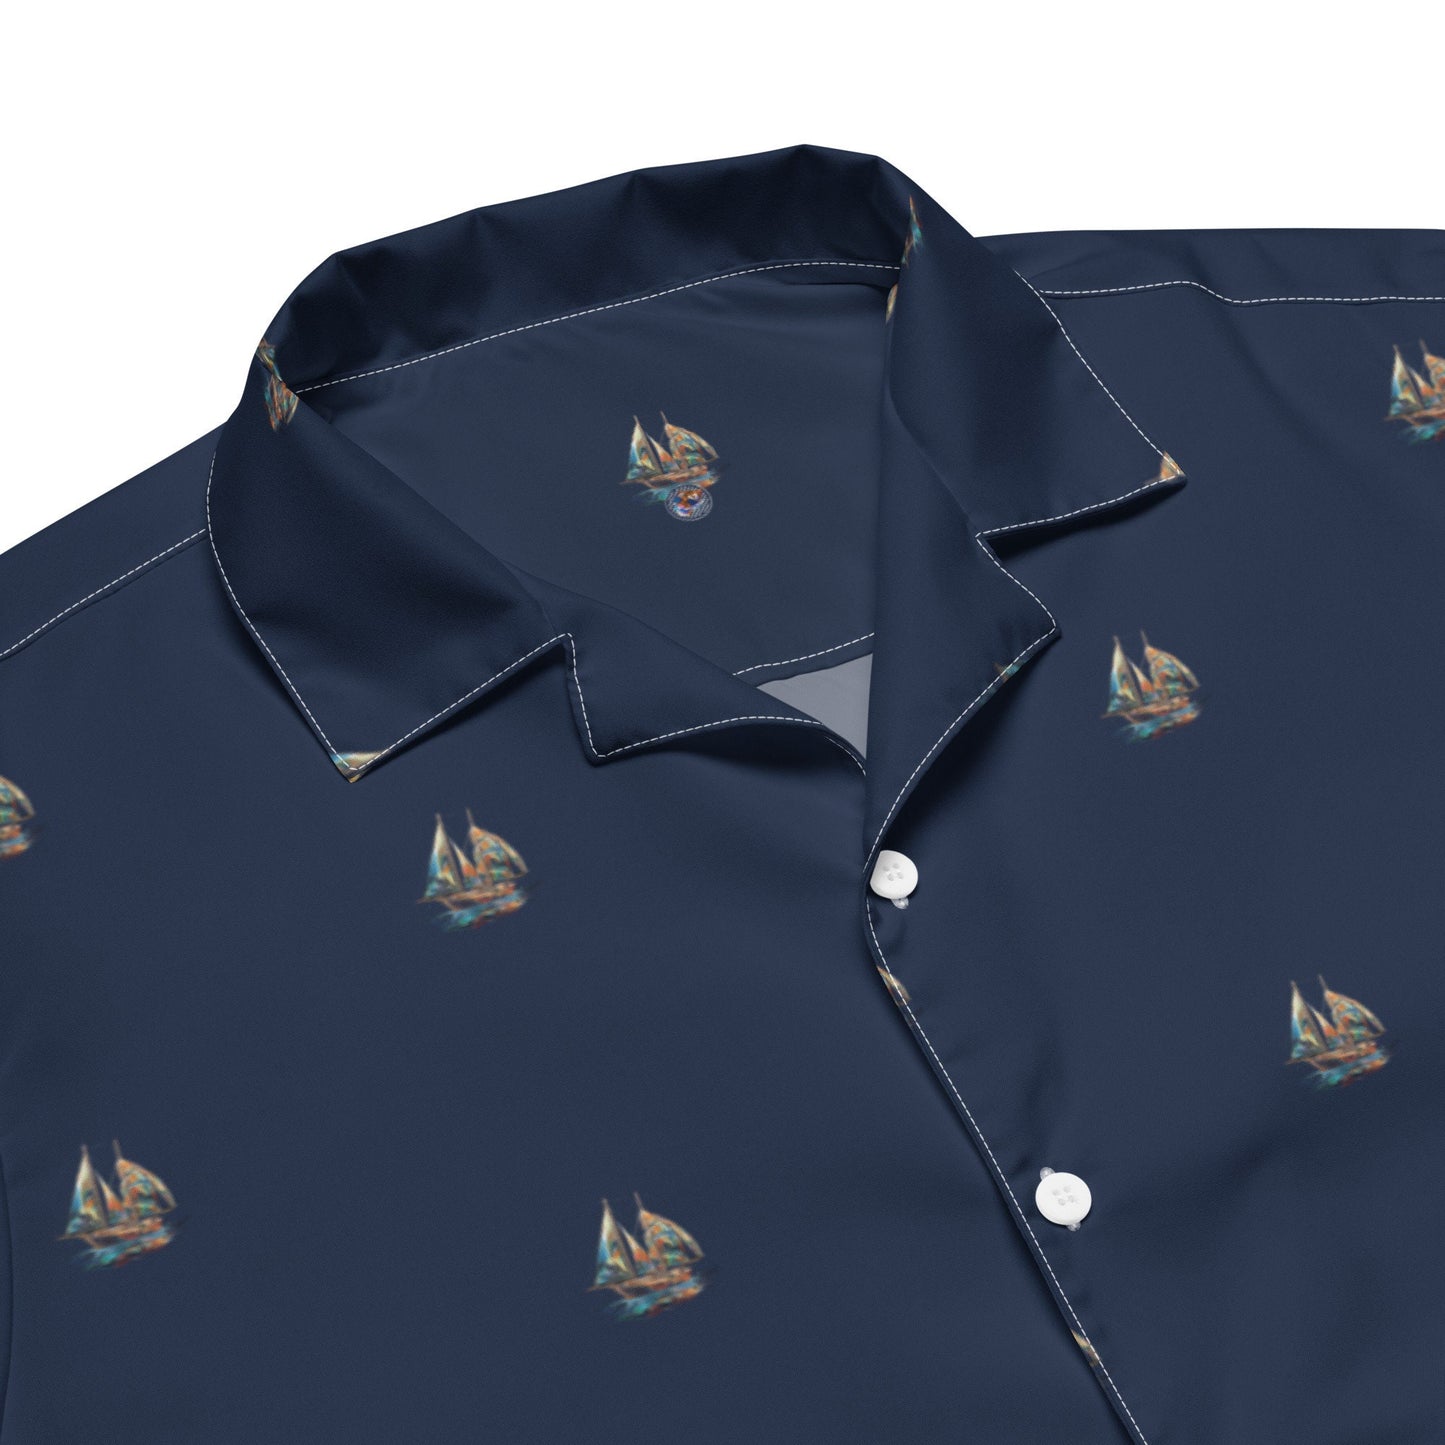 Funky Tiger® Going Sailing Hawaiian Shirt in Navy, Hawaiian Shirt With Sailboat Motif | For Men | Everyday| Beach | Party | Casual Button Up